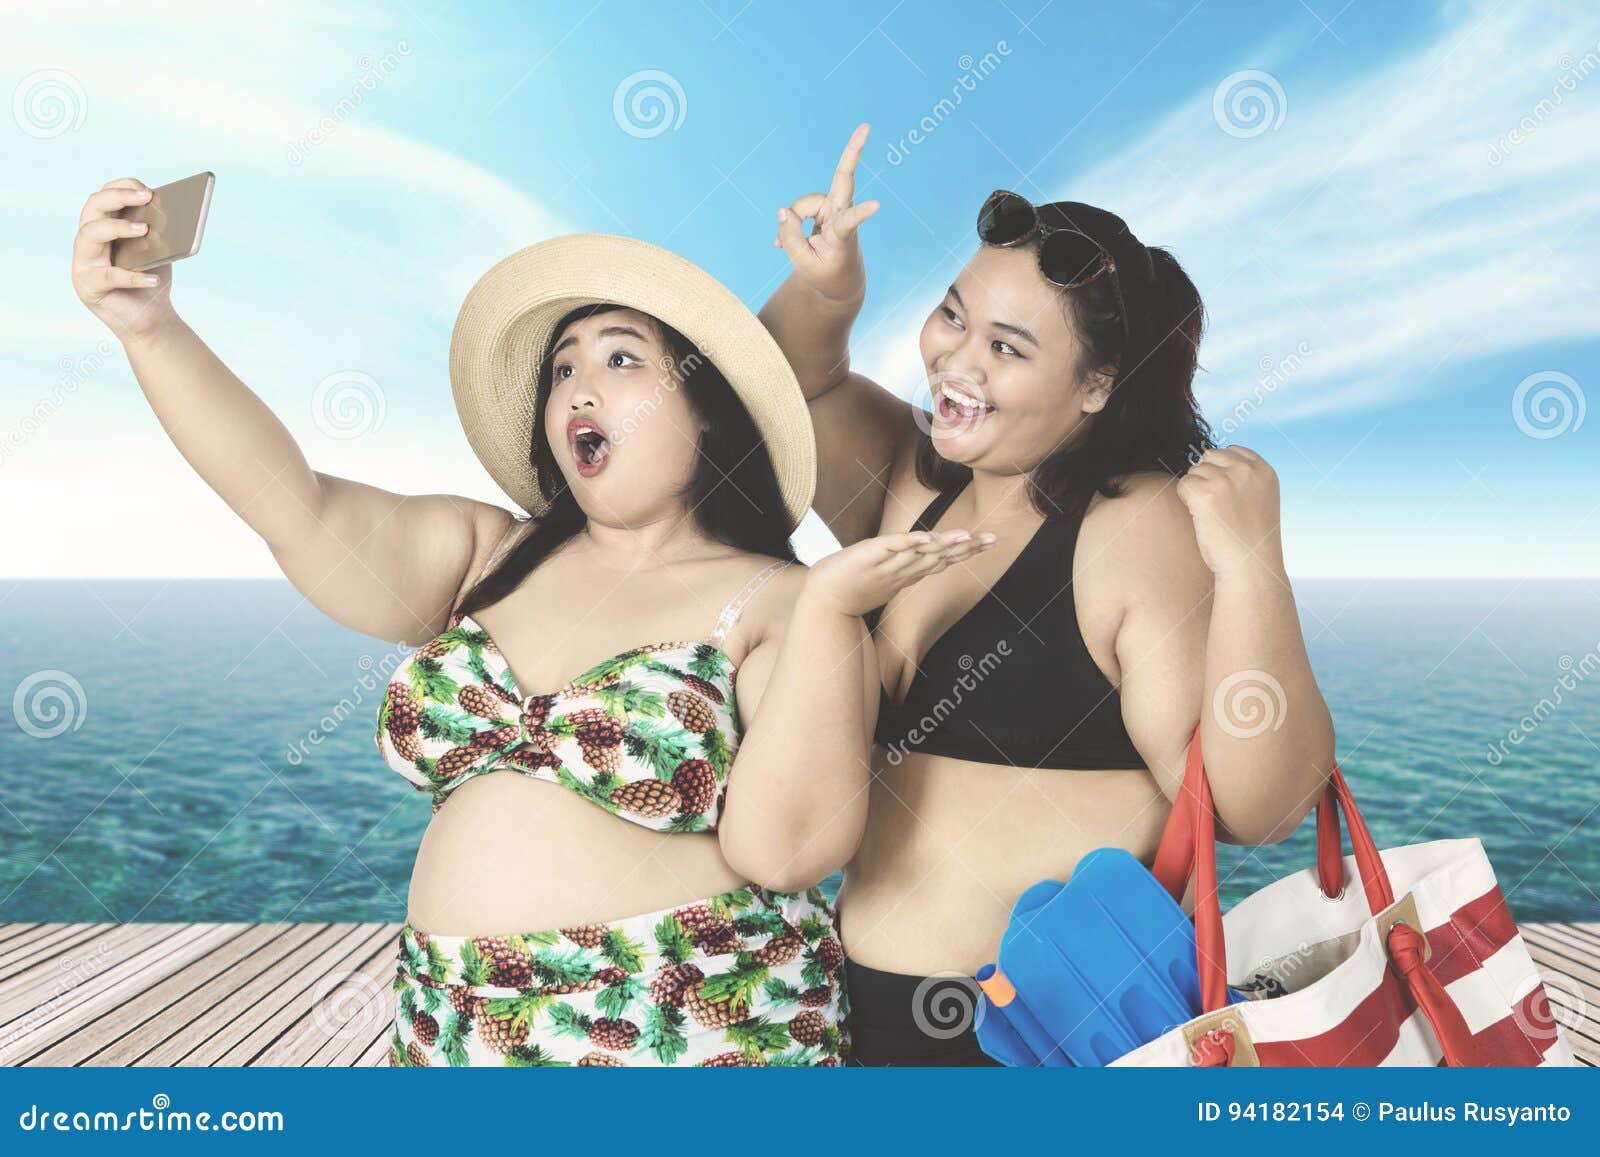 bikini selfie pov nipples